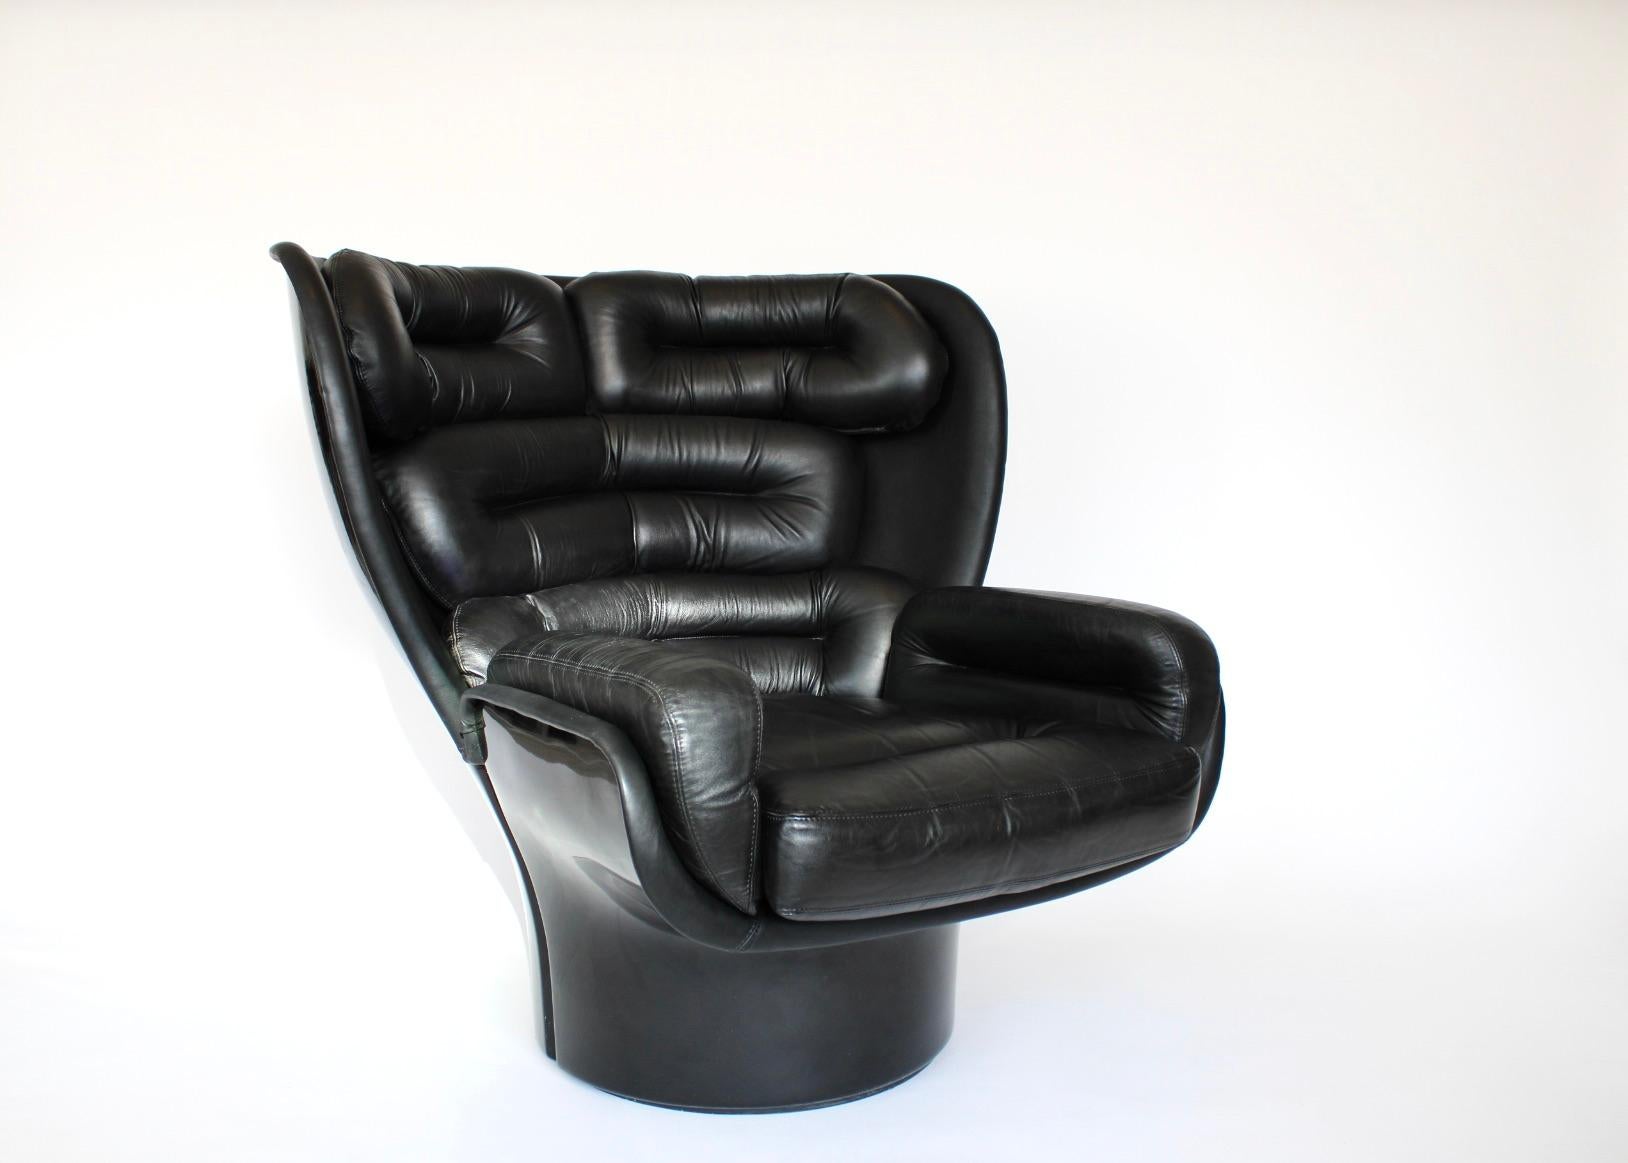 In 1964, Joe Colombo designed the Elda fibreglass armchair for Comfort.
The 